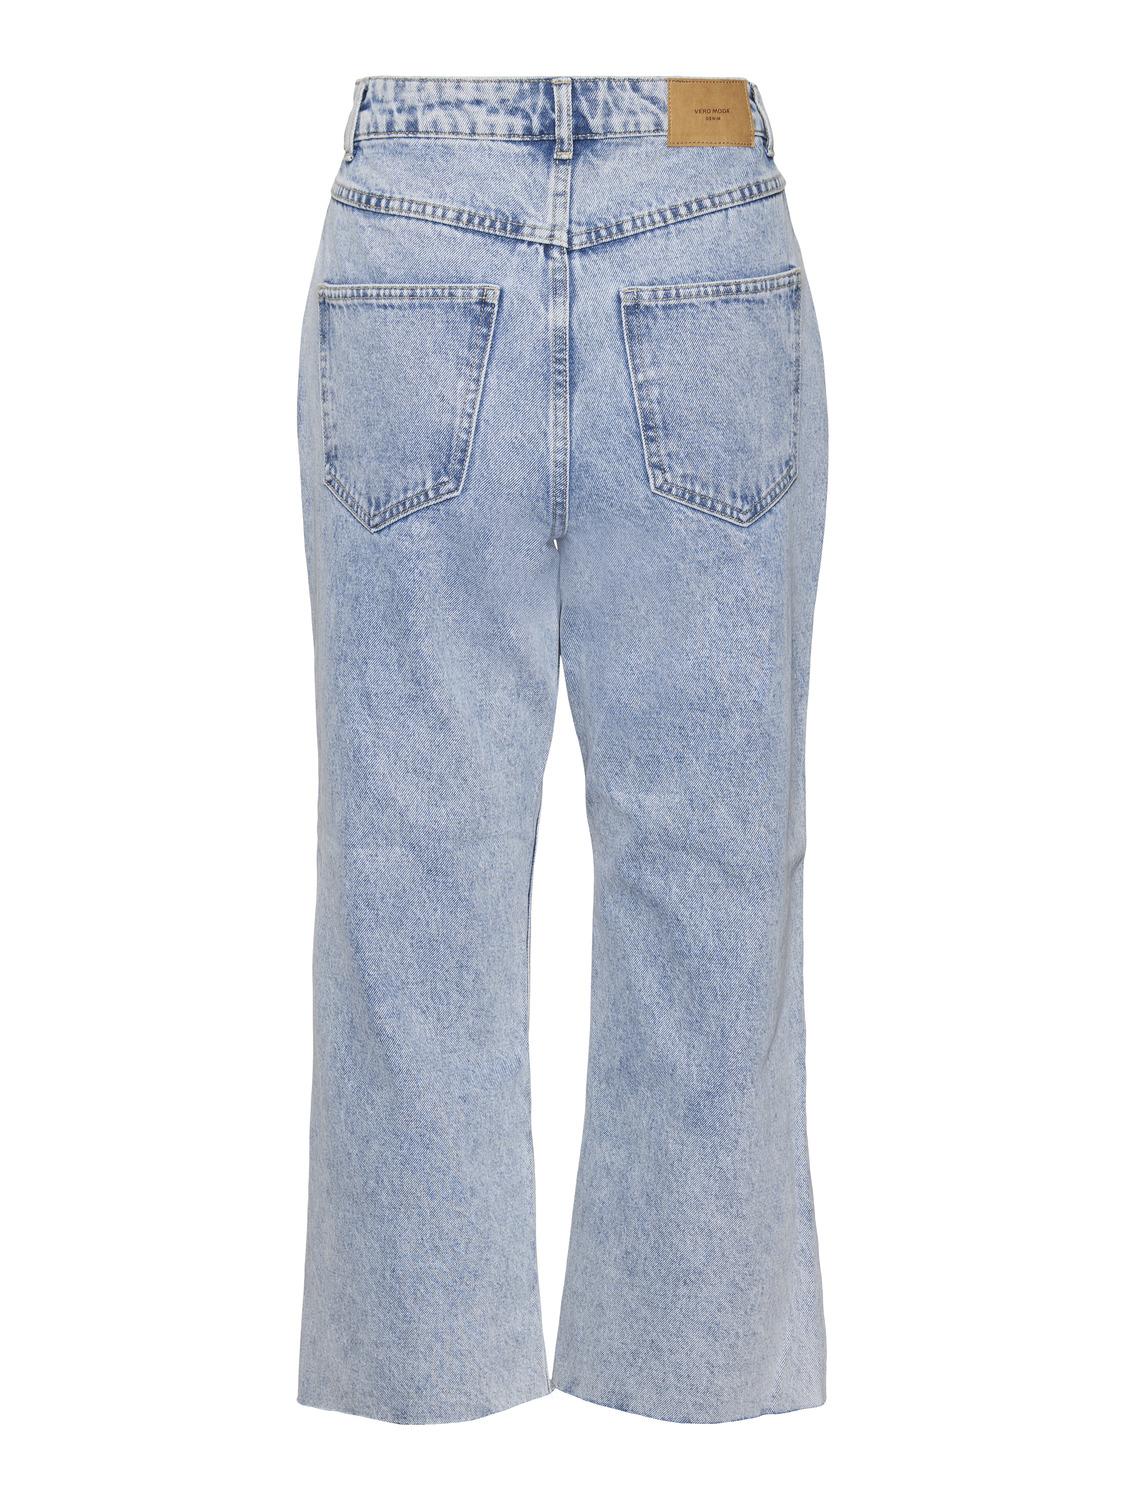 Kithy Jeans, Light Blue Denim, W29/L32